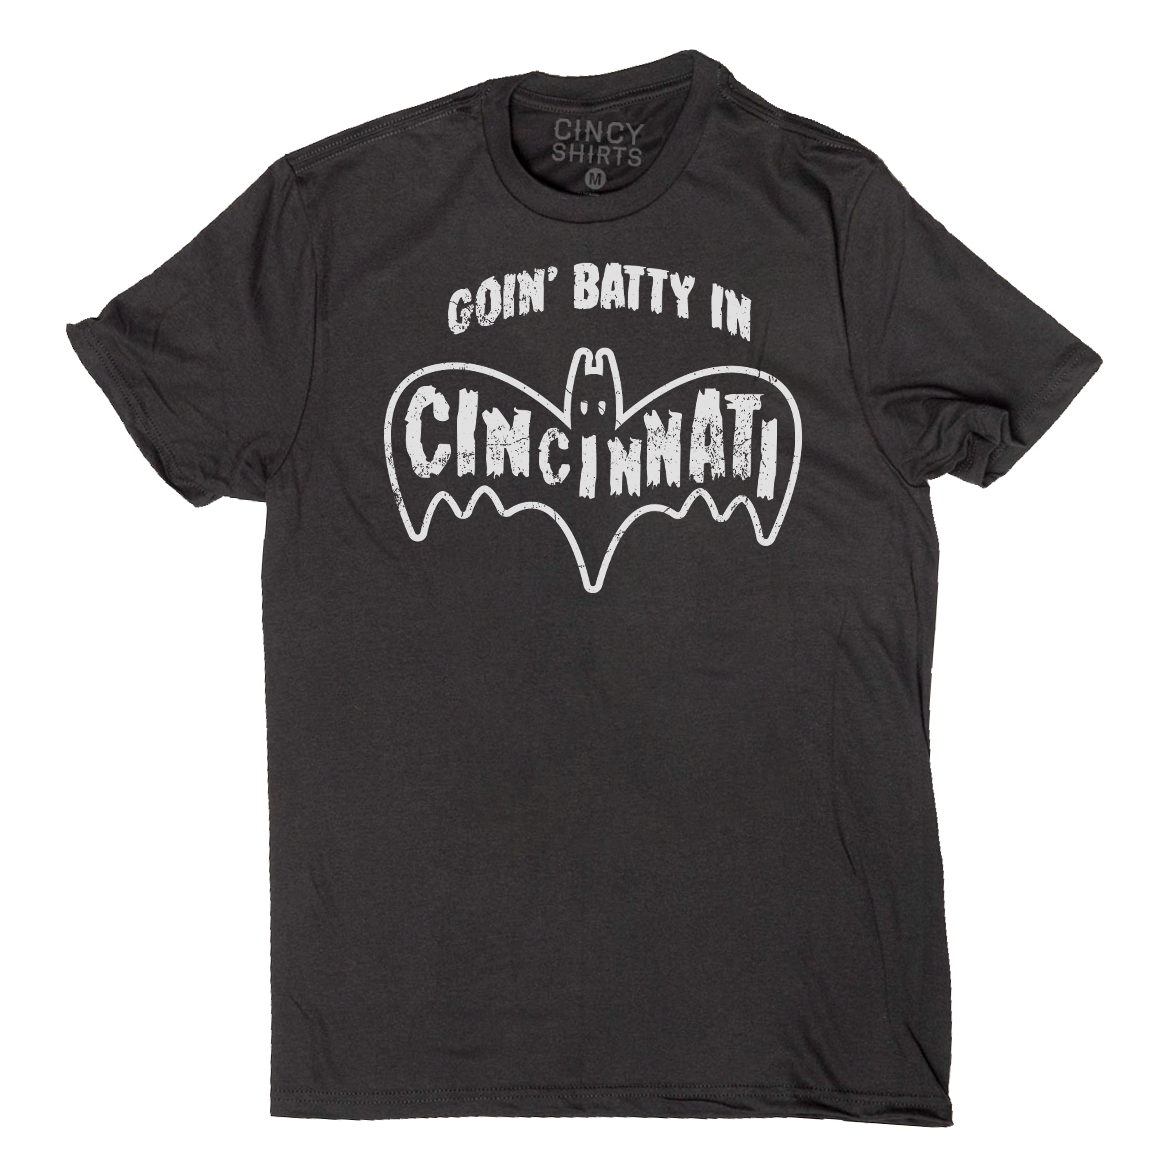 Goin' Batty in Cincinnati - Cincy Shirts